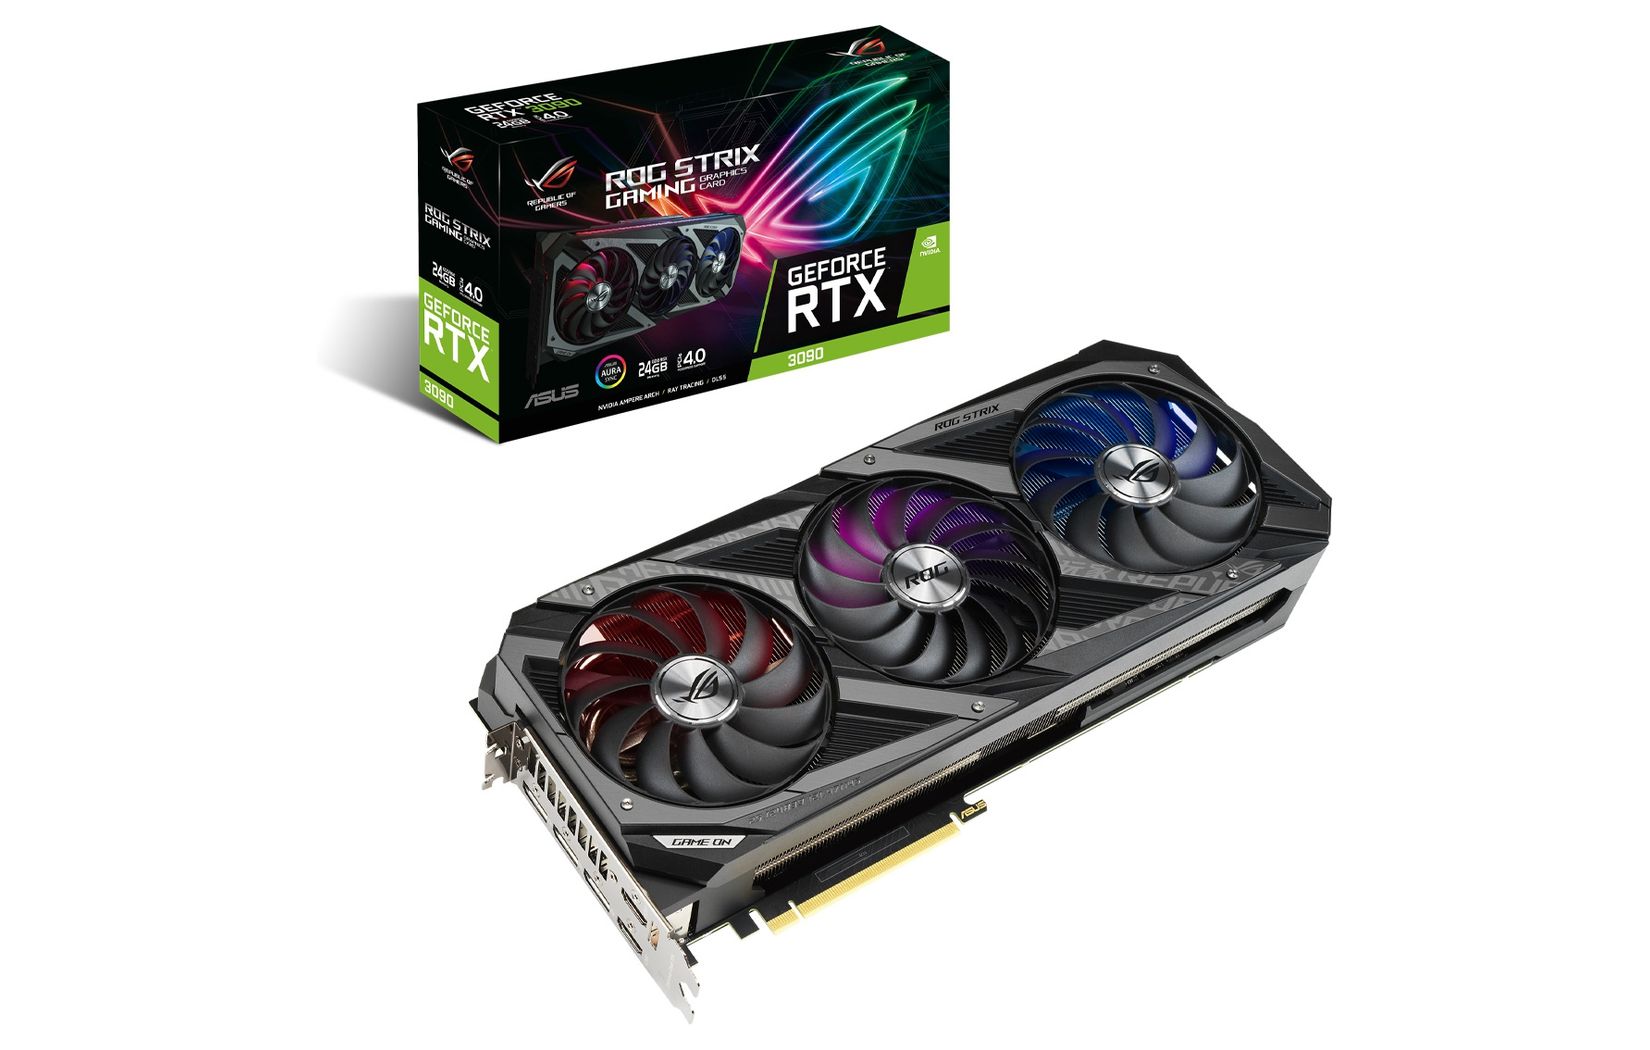 asus rtx 30 strix 1 videocardz เอซุสประกาศเปิดตัวการ์ดจอ Nvidia GeForce RTX 30ซีรี่ย์รุ่นใหม่ล่าสุด 5รุ่น ROG Strix GeForce RTX 3090 , ASUS TUF Gaming GeForce RTX 3090 , GeForce RTX 3080 , ROG Strix GeForce RTX 3070 และ ASUS Dual GeForce RTX 3070 อย่างเป็นทางการ